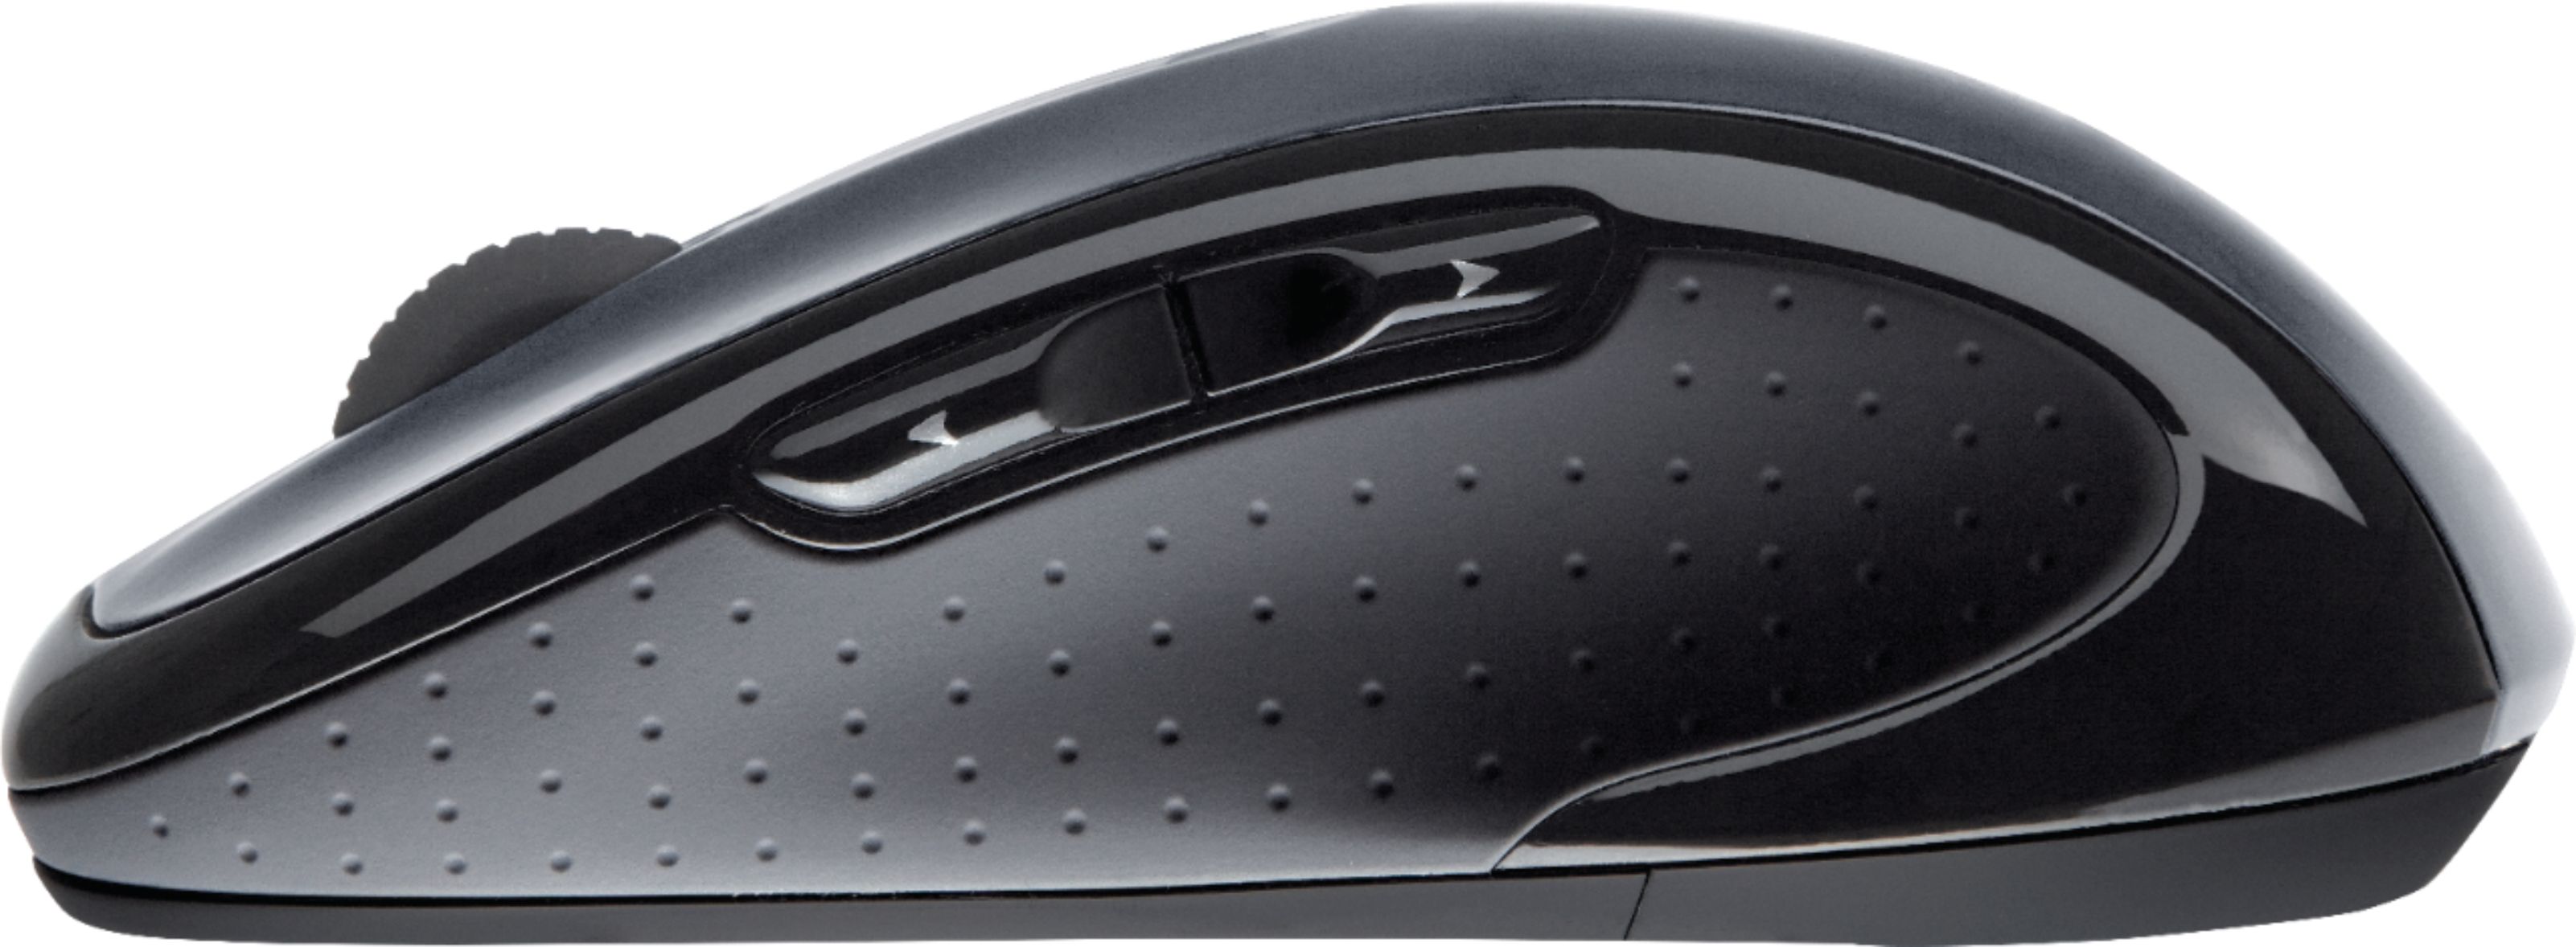 Logitech M510 Wireless Optical Ambidextrous Mouse Silver Black 910 0012 Best Buy